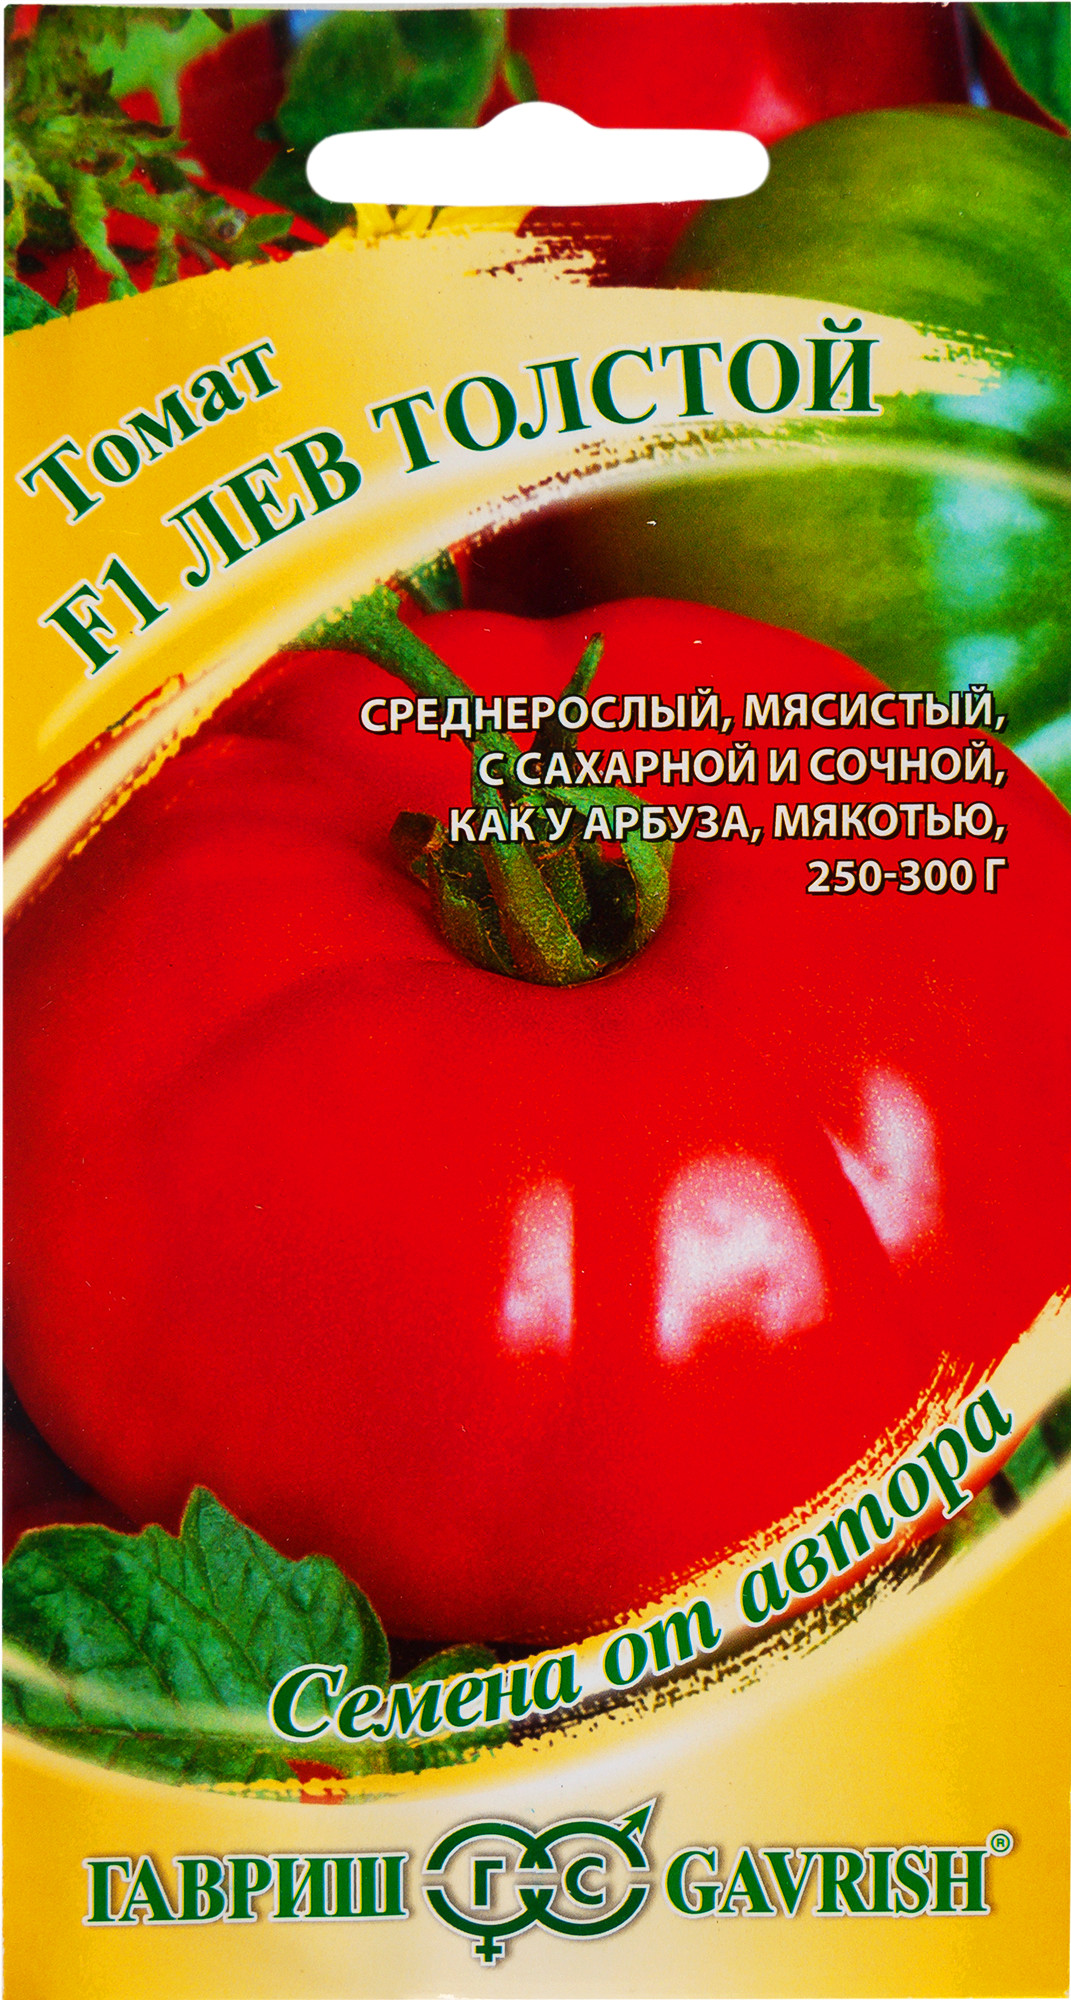 Гавриш томат Лев толстой f1